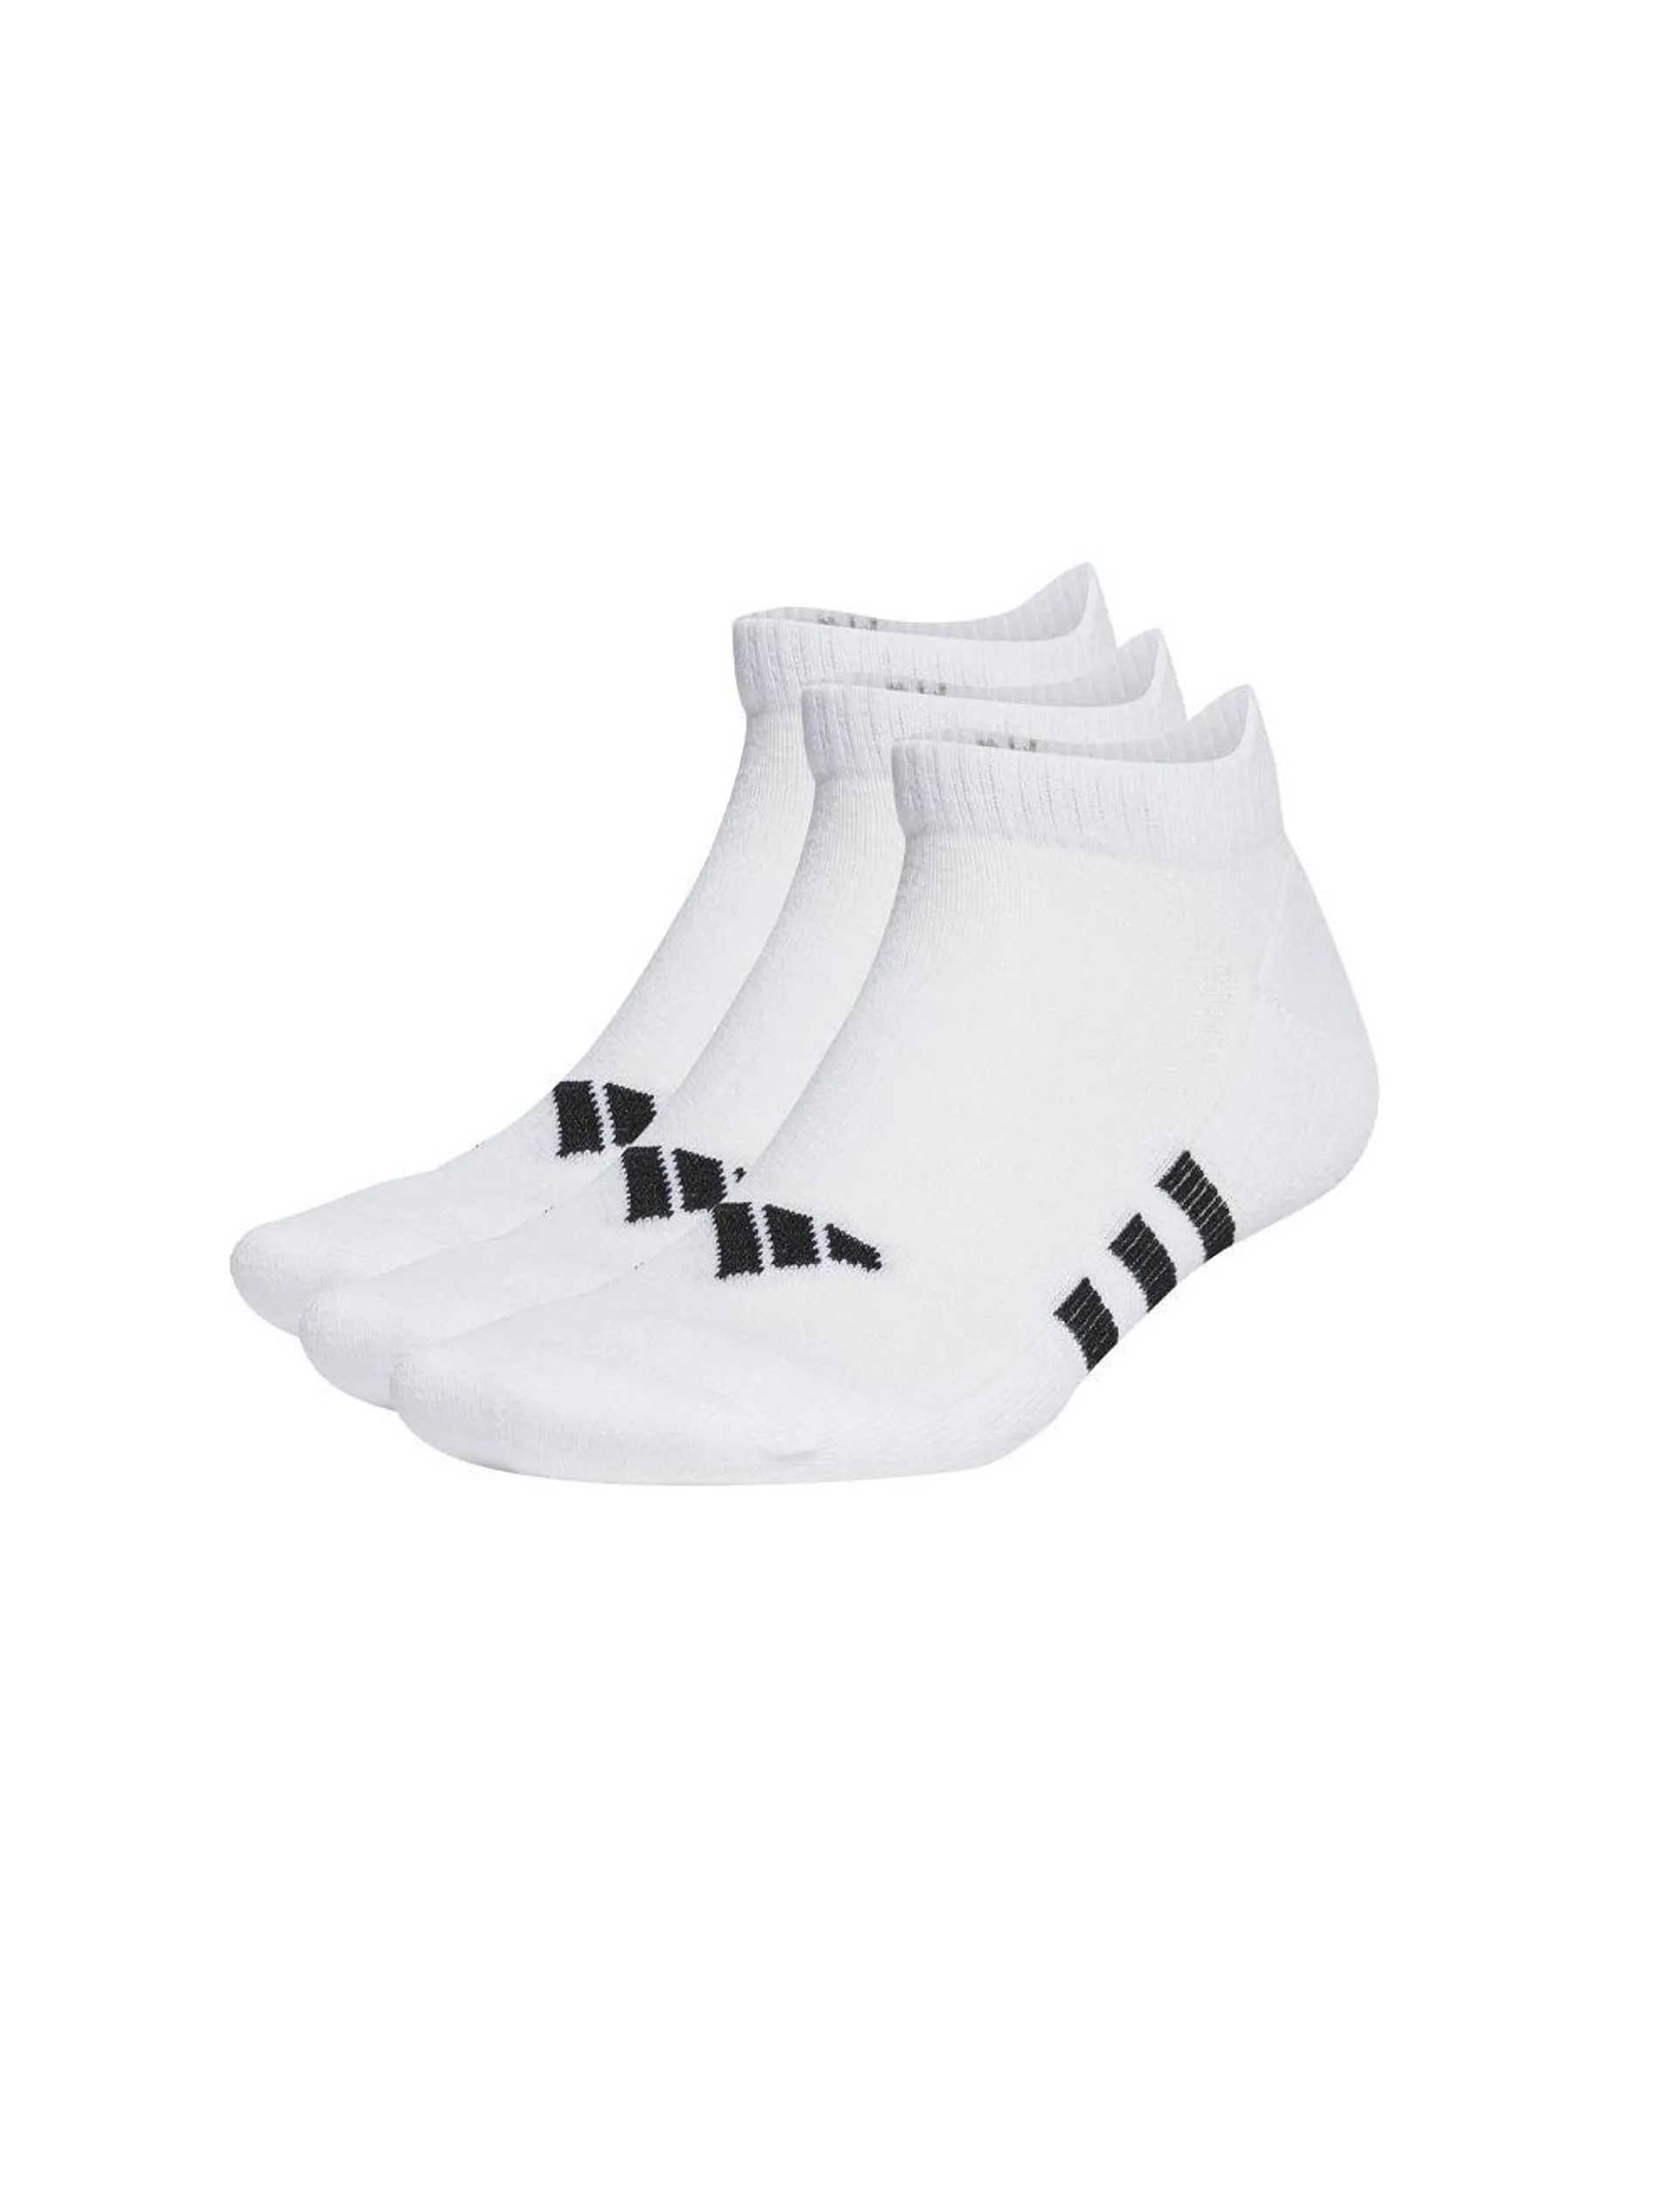 adidas Performance Low Cut Socks 3 Pack White